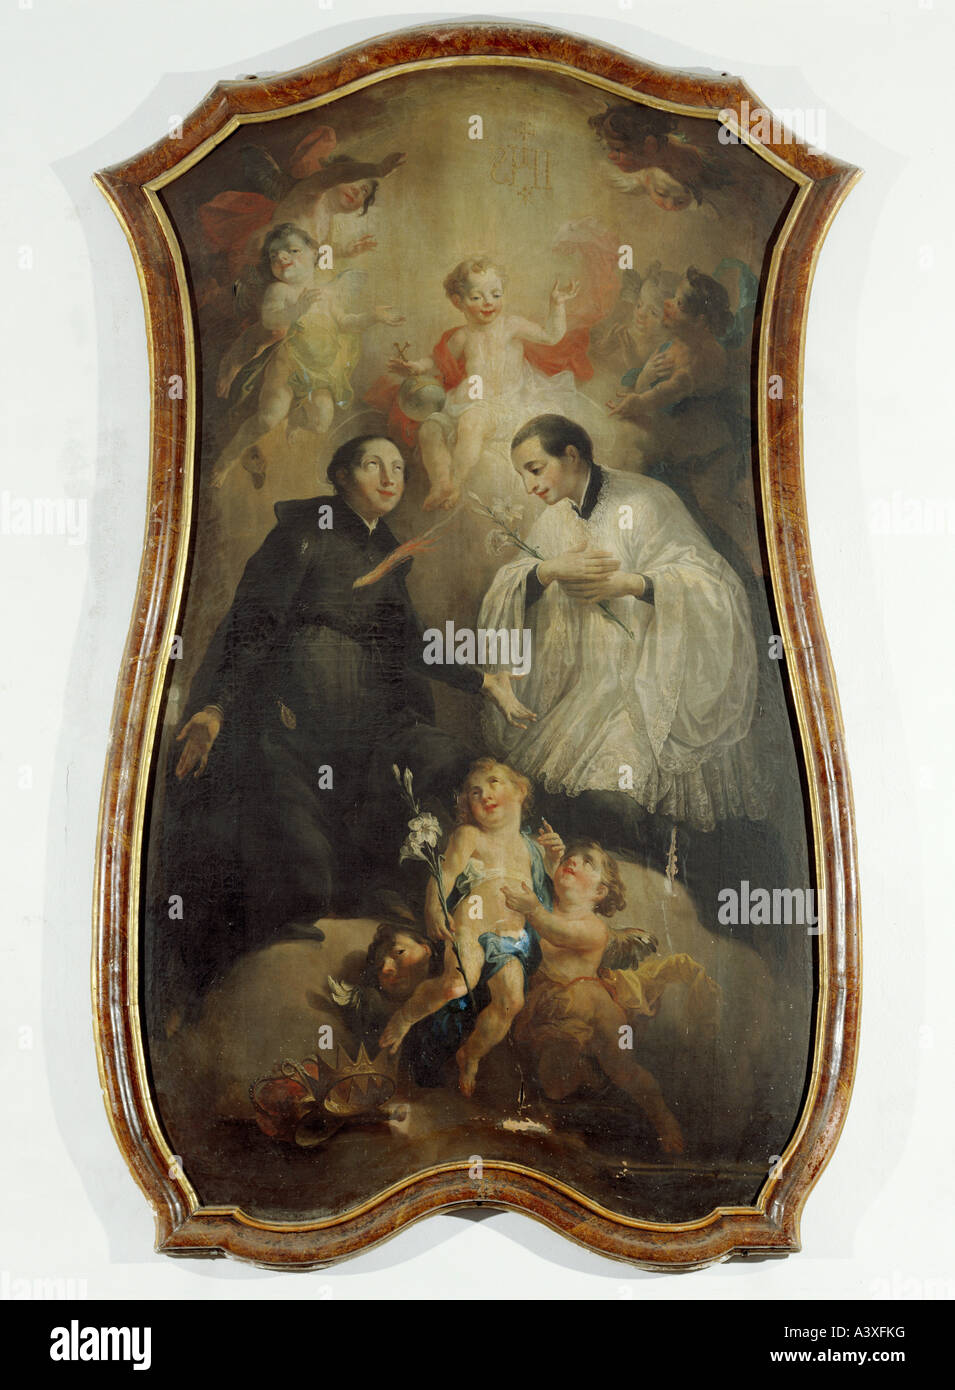 'fine arts, Brugger, Andreas, (1737 - 1812), painting, 'Saint Aloysius and Stanislaus Kostka', 18th century, Saint Martin pari Stock Photo